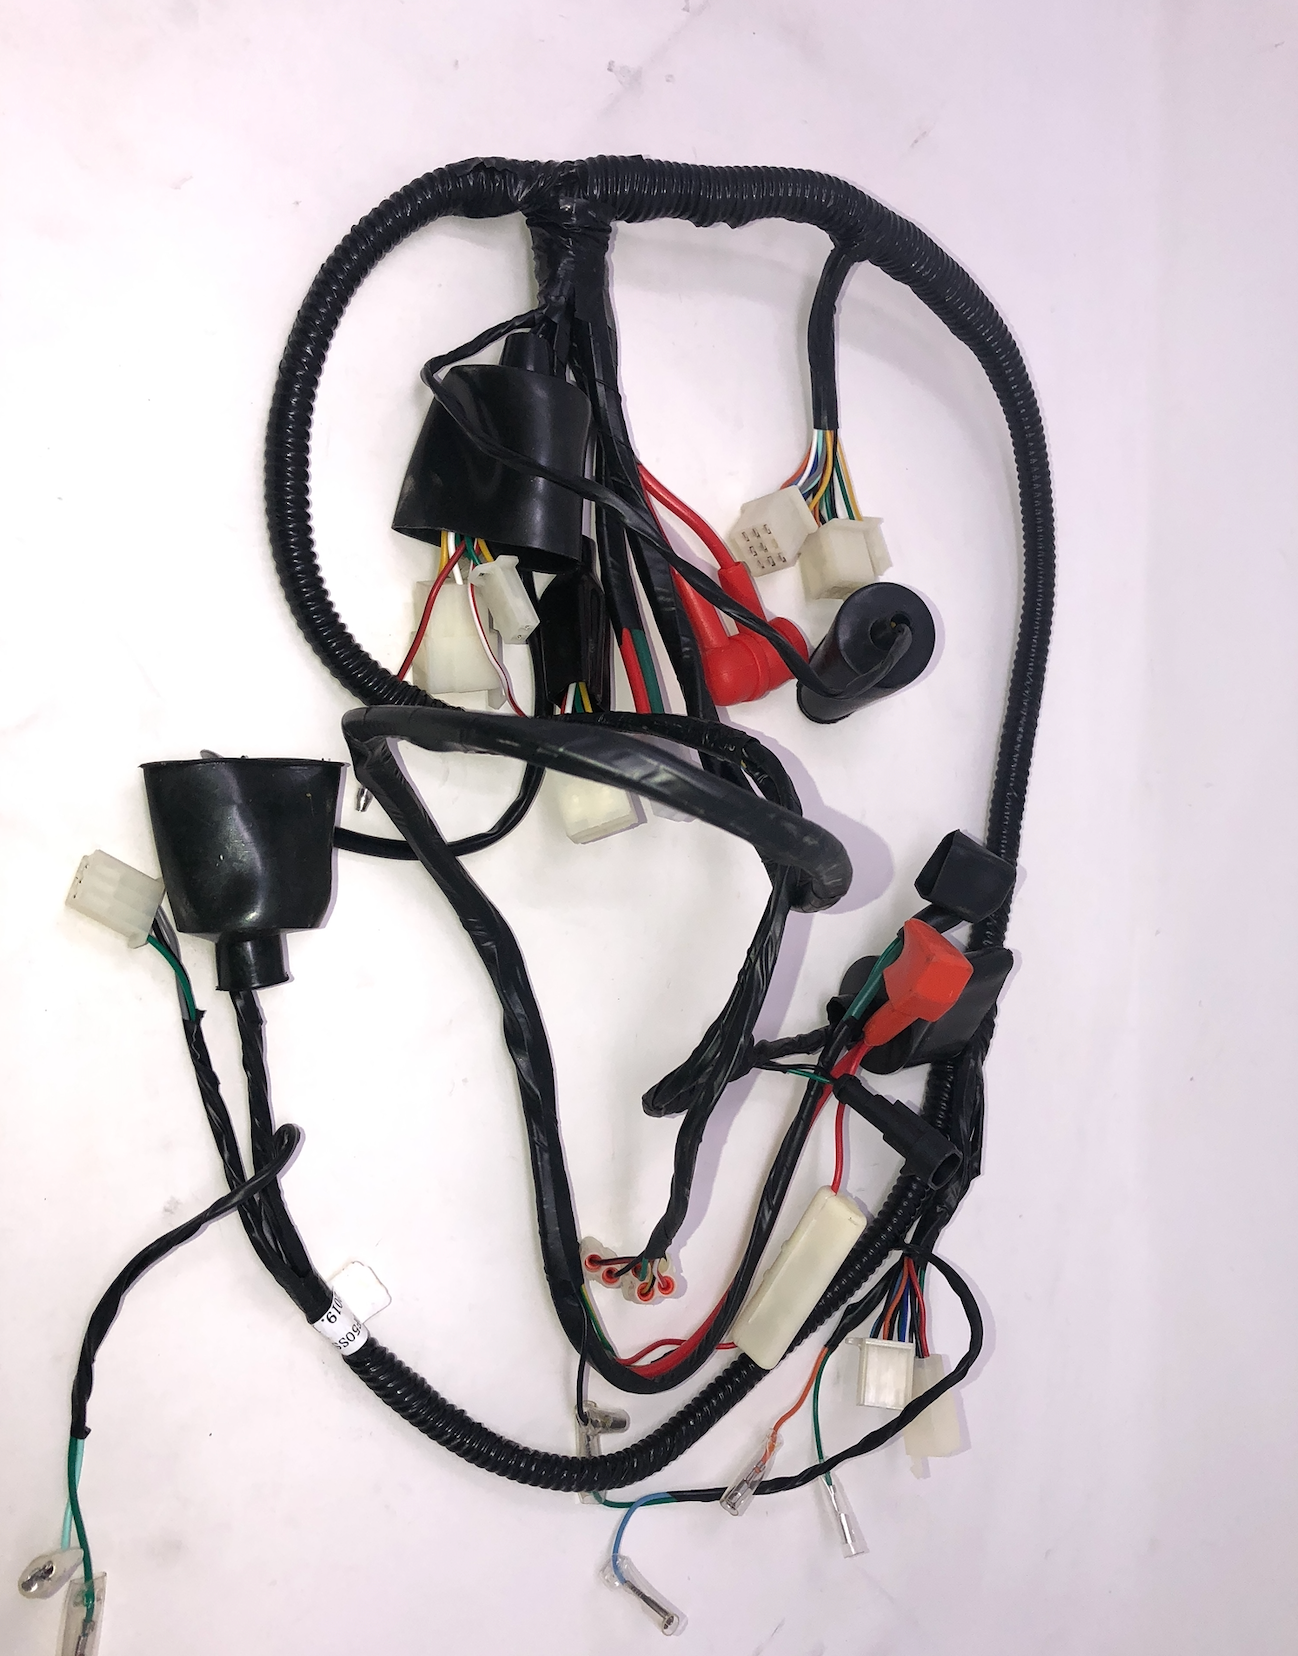 Part # 08010073 wiring harness for DF50SST Super Pocket bike. Venom X18 50cc wiring harness 08010073